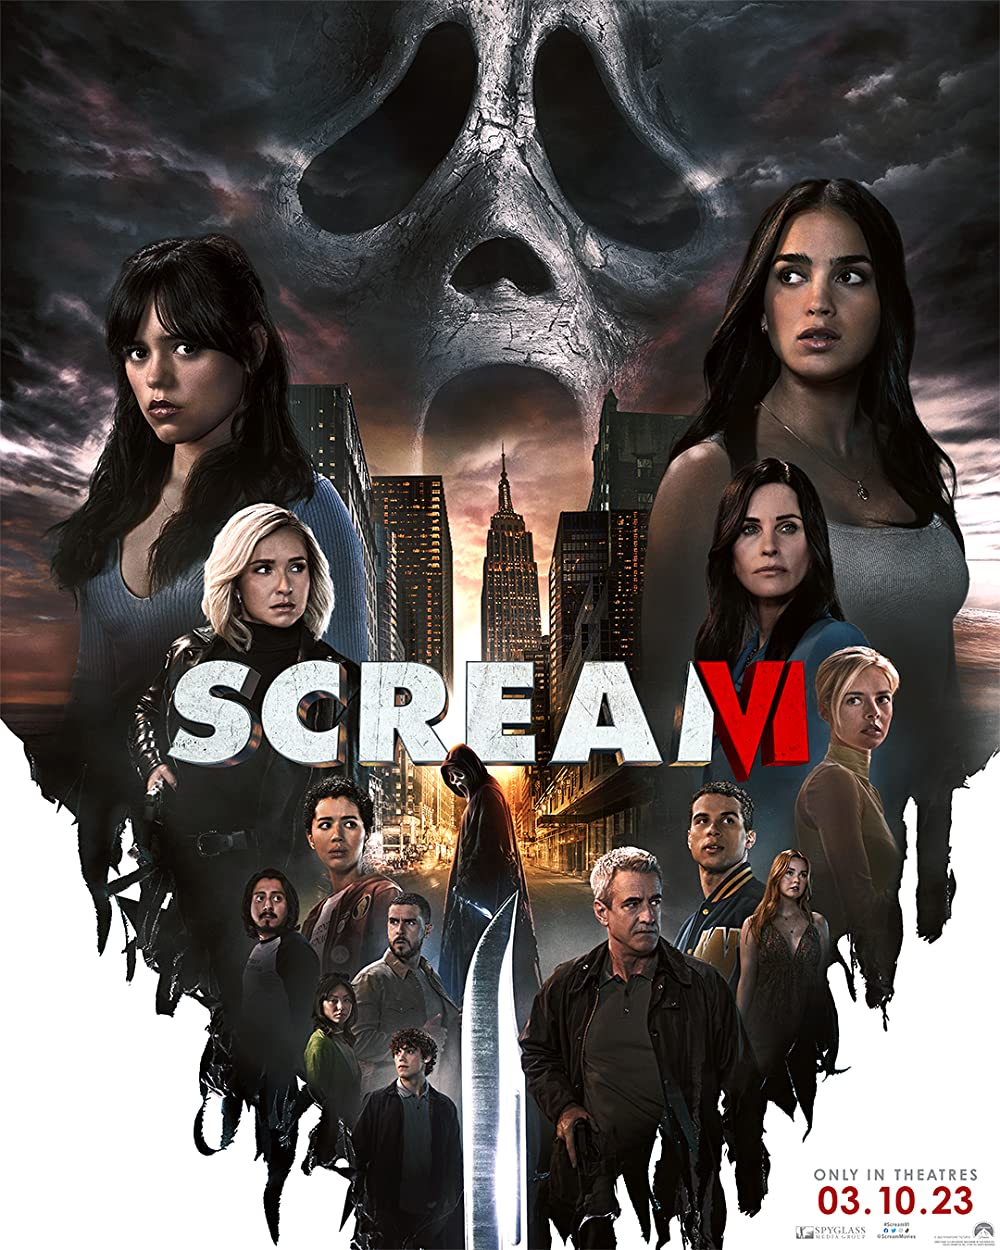 Scream VI movie poster